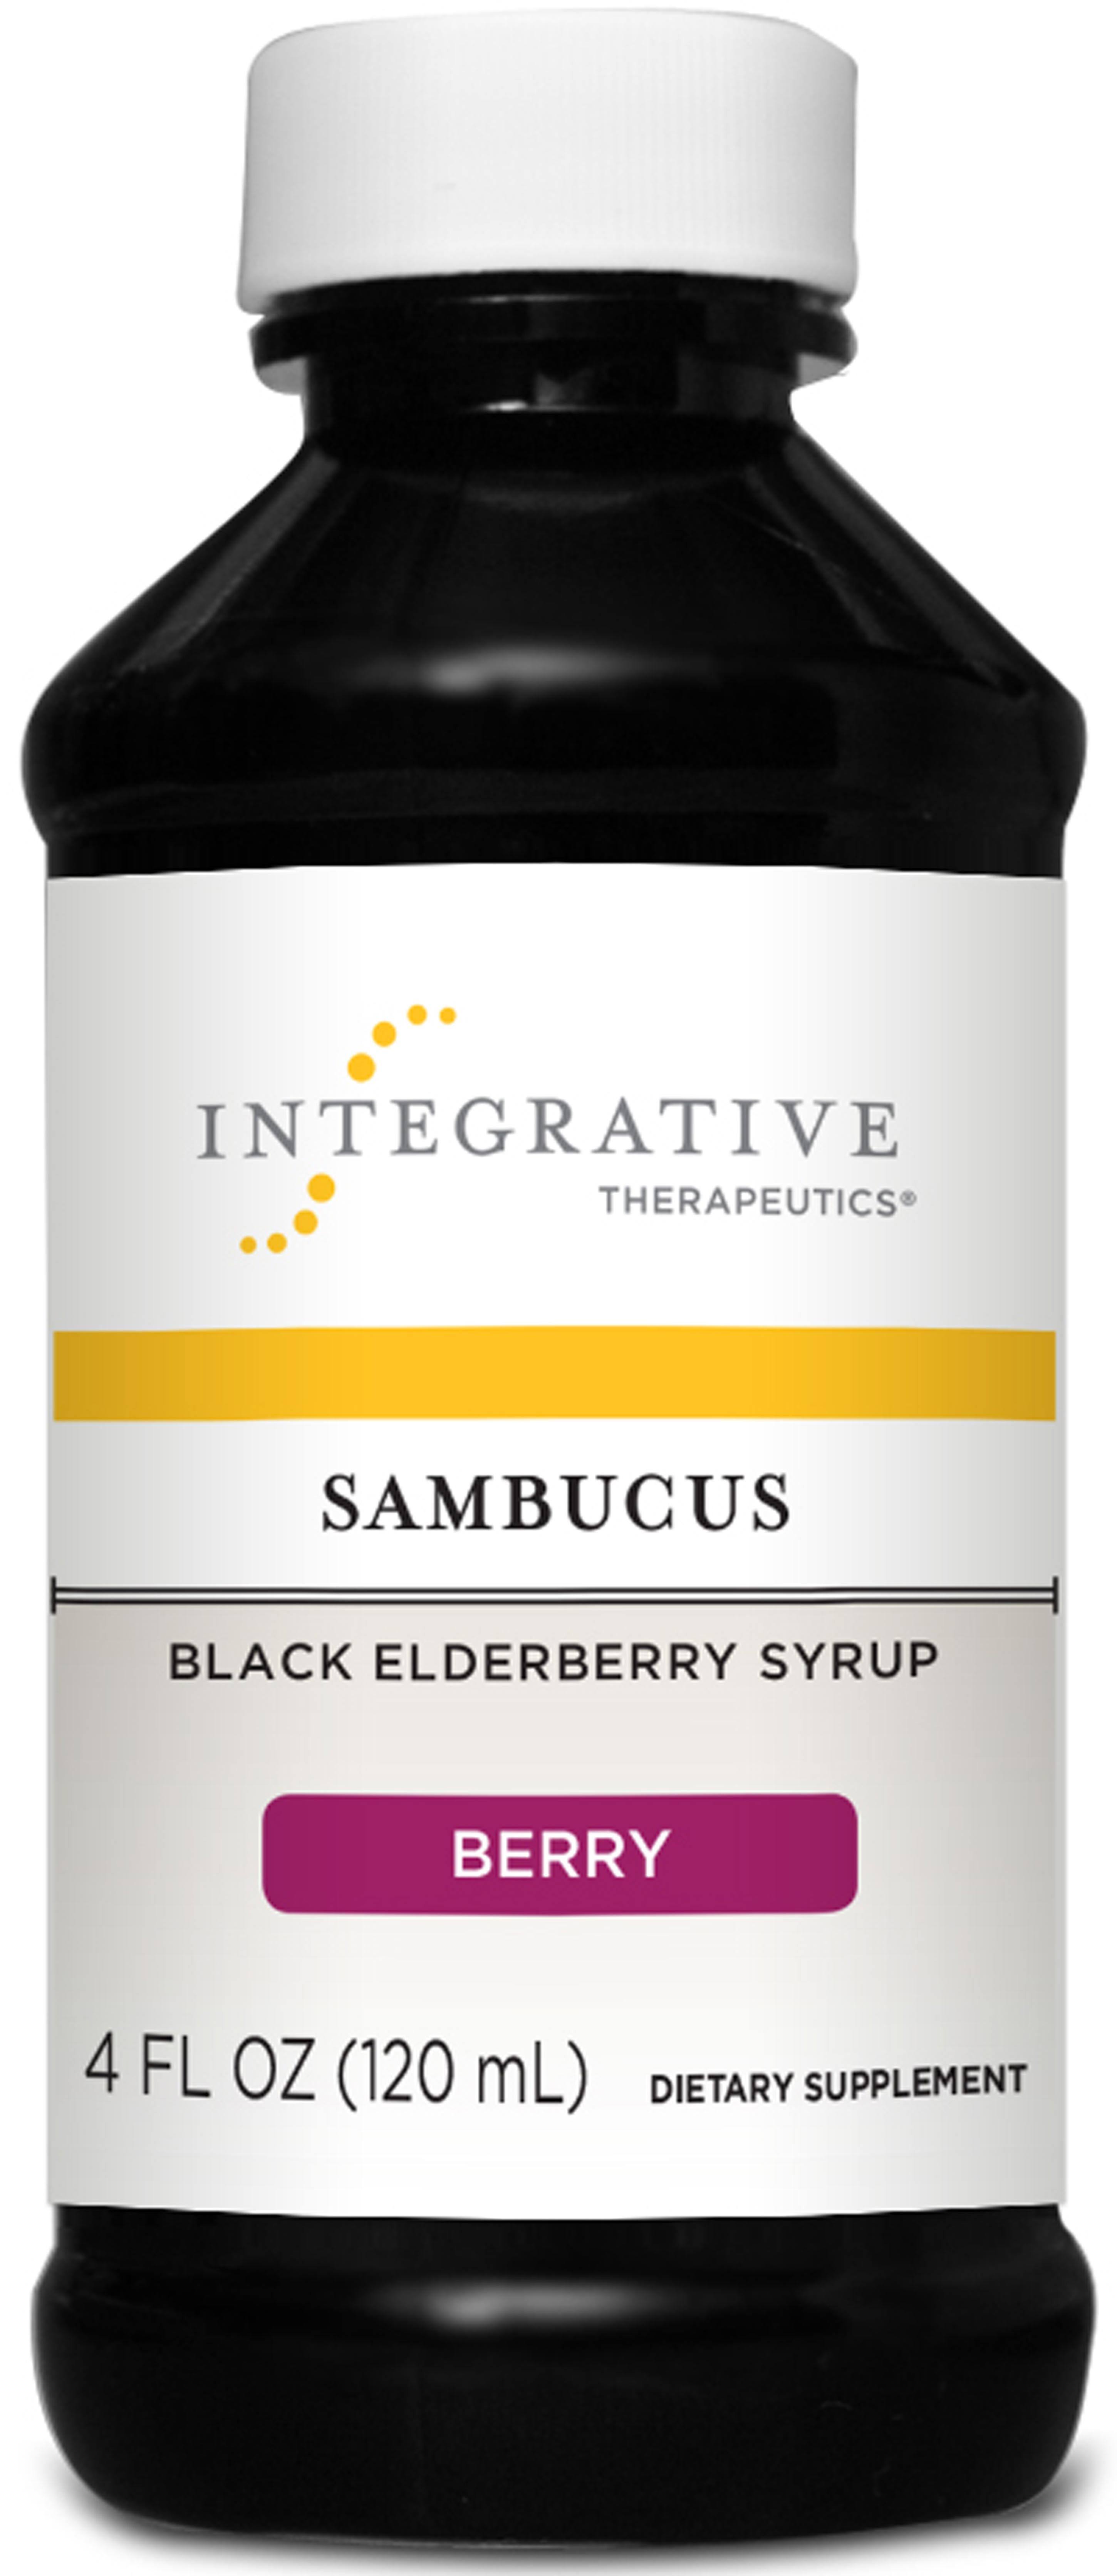 Integrative Therapeutics, Inc. Sambucus Black Elderberry Syrup - Berry, 4floz